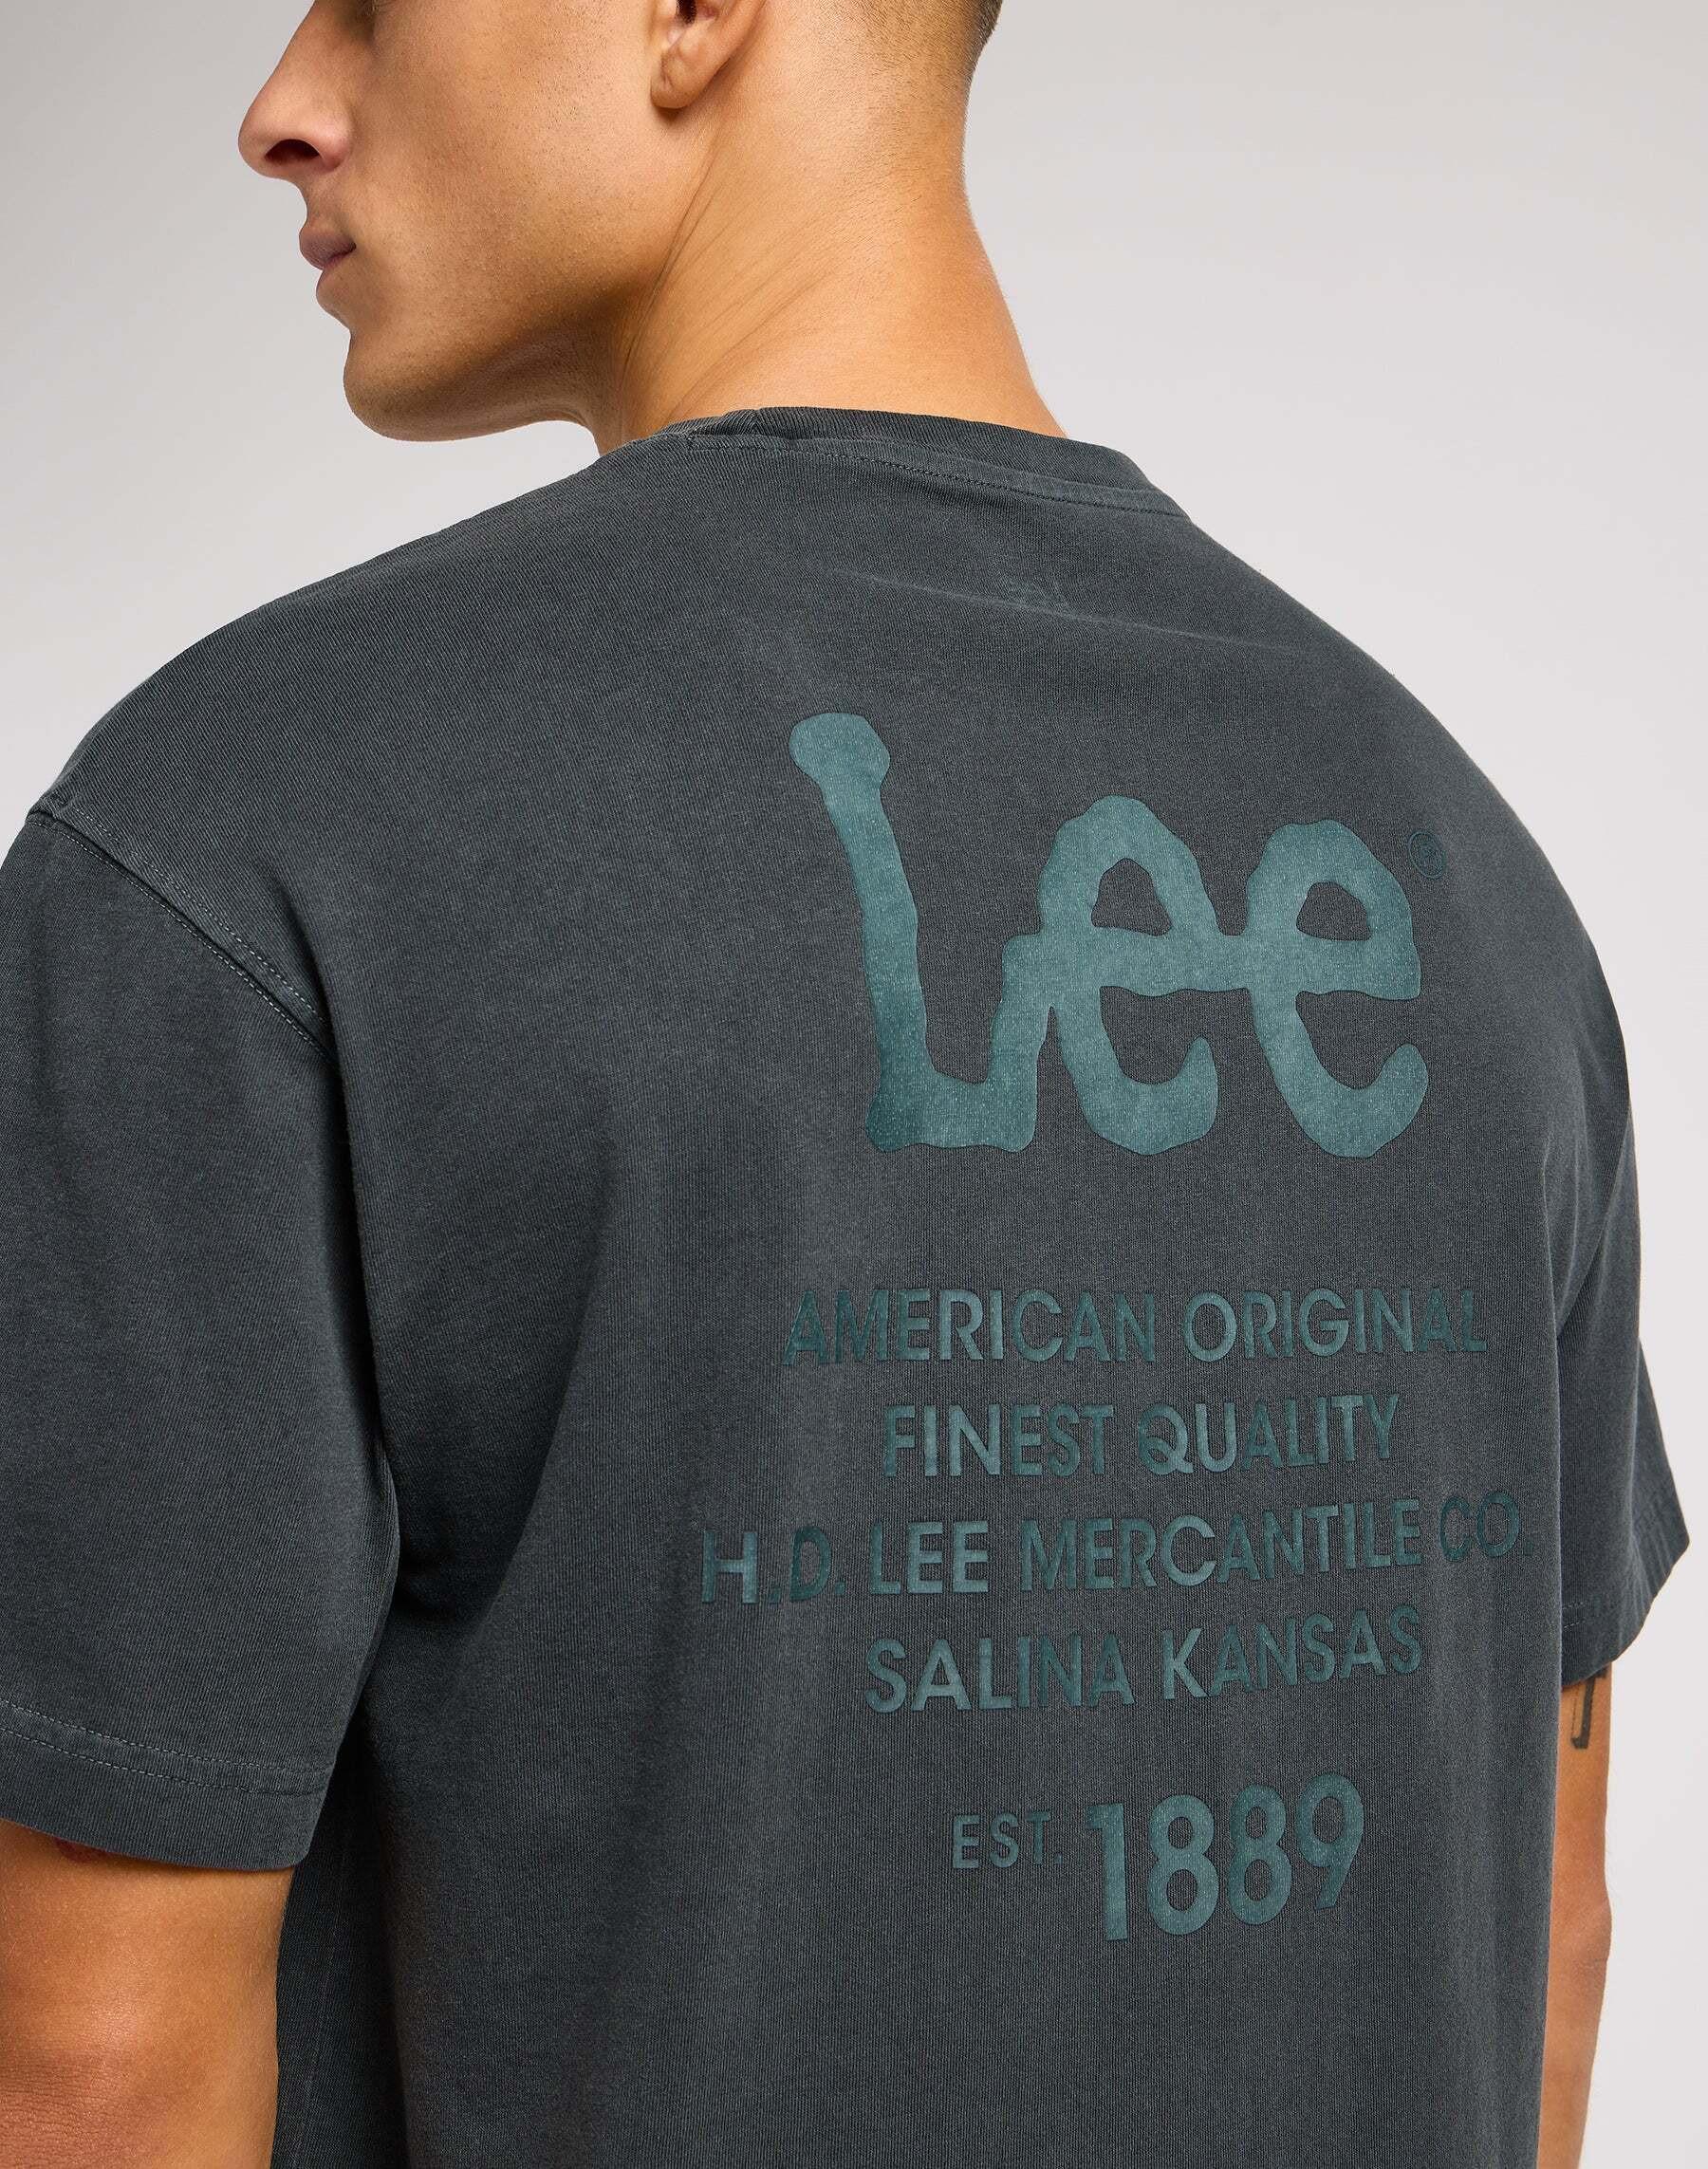 Lee  T-Shirts Loose Logo Tee 